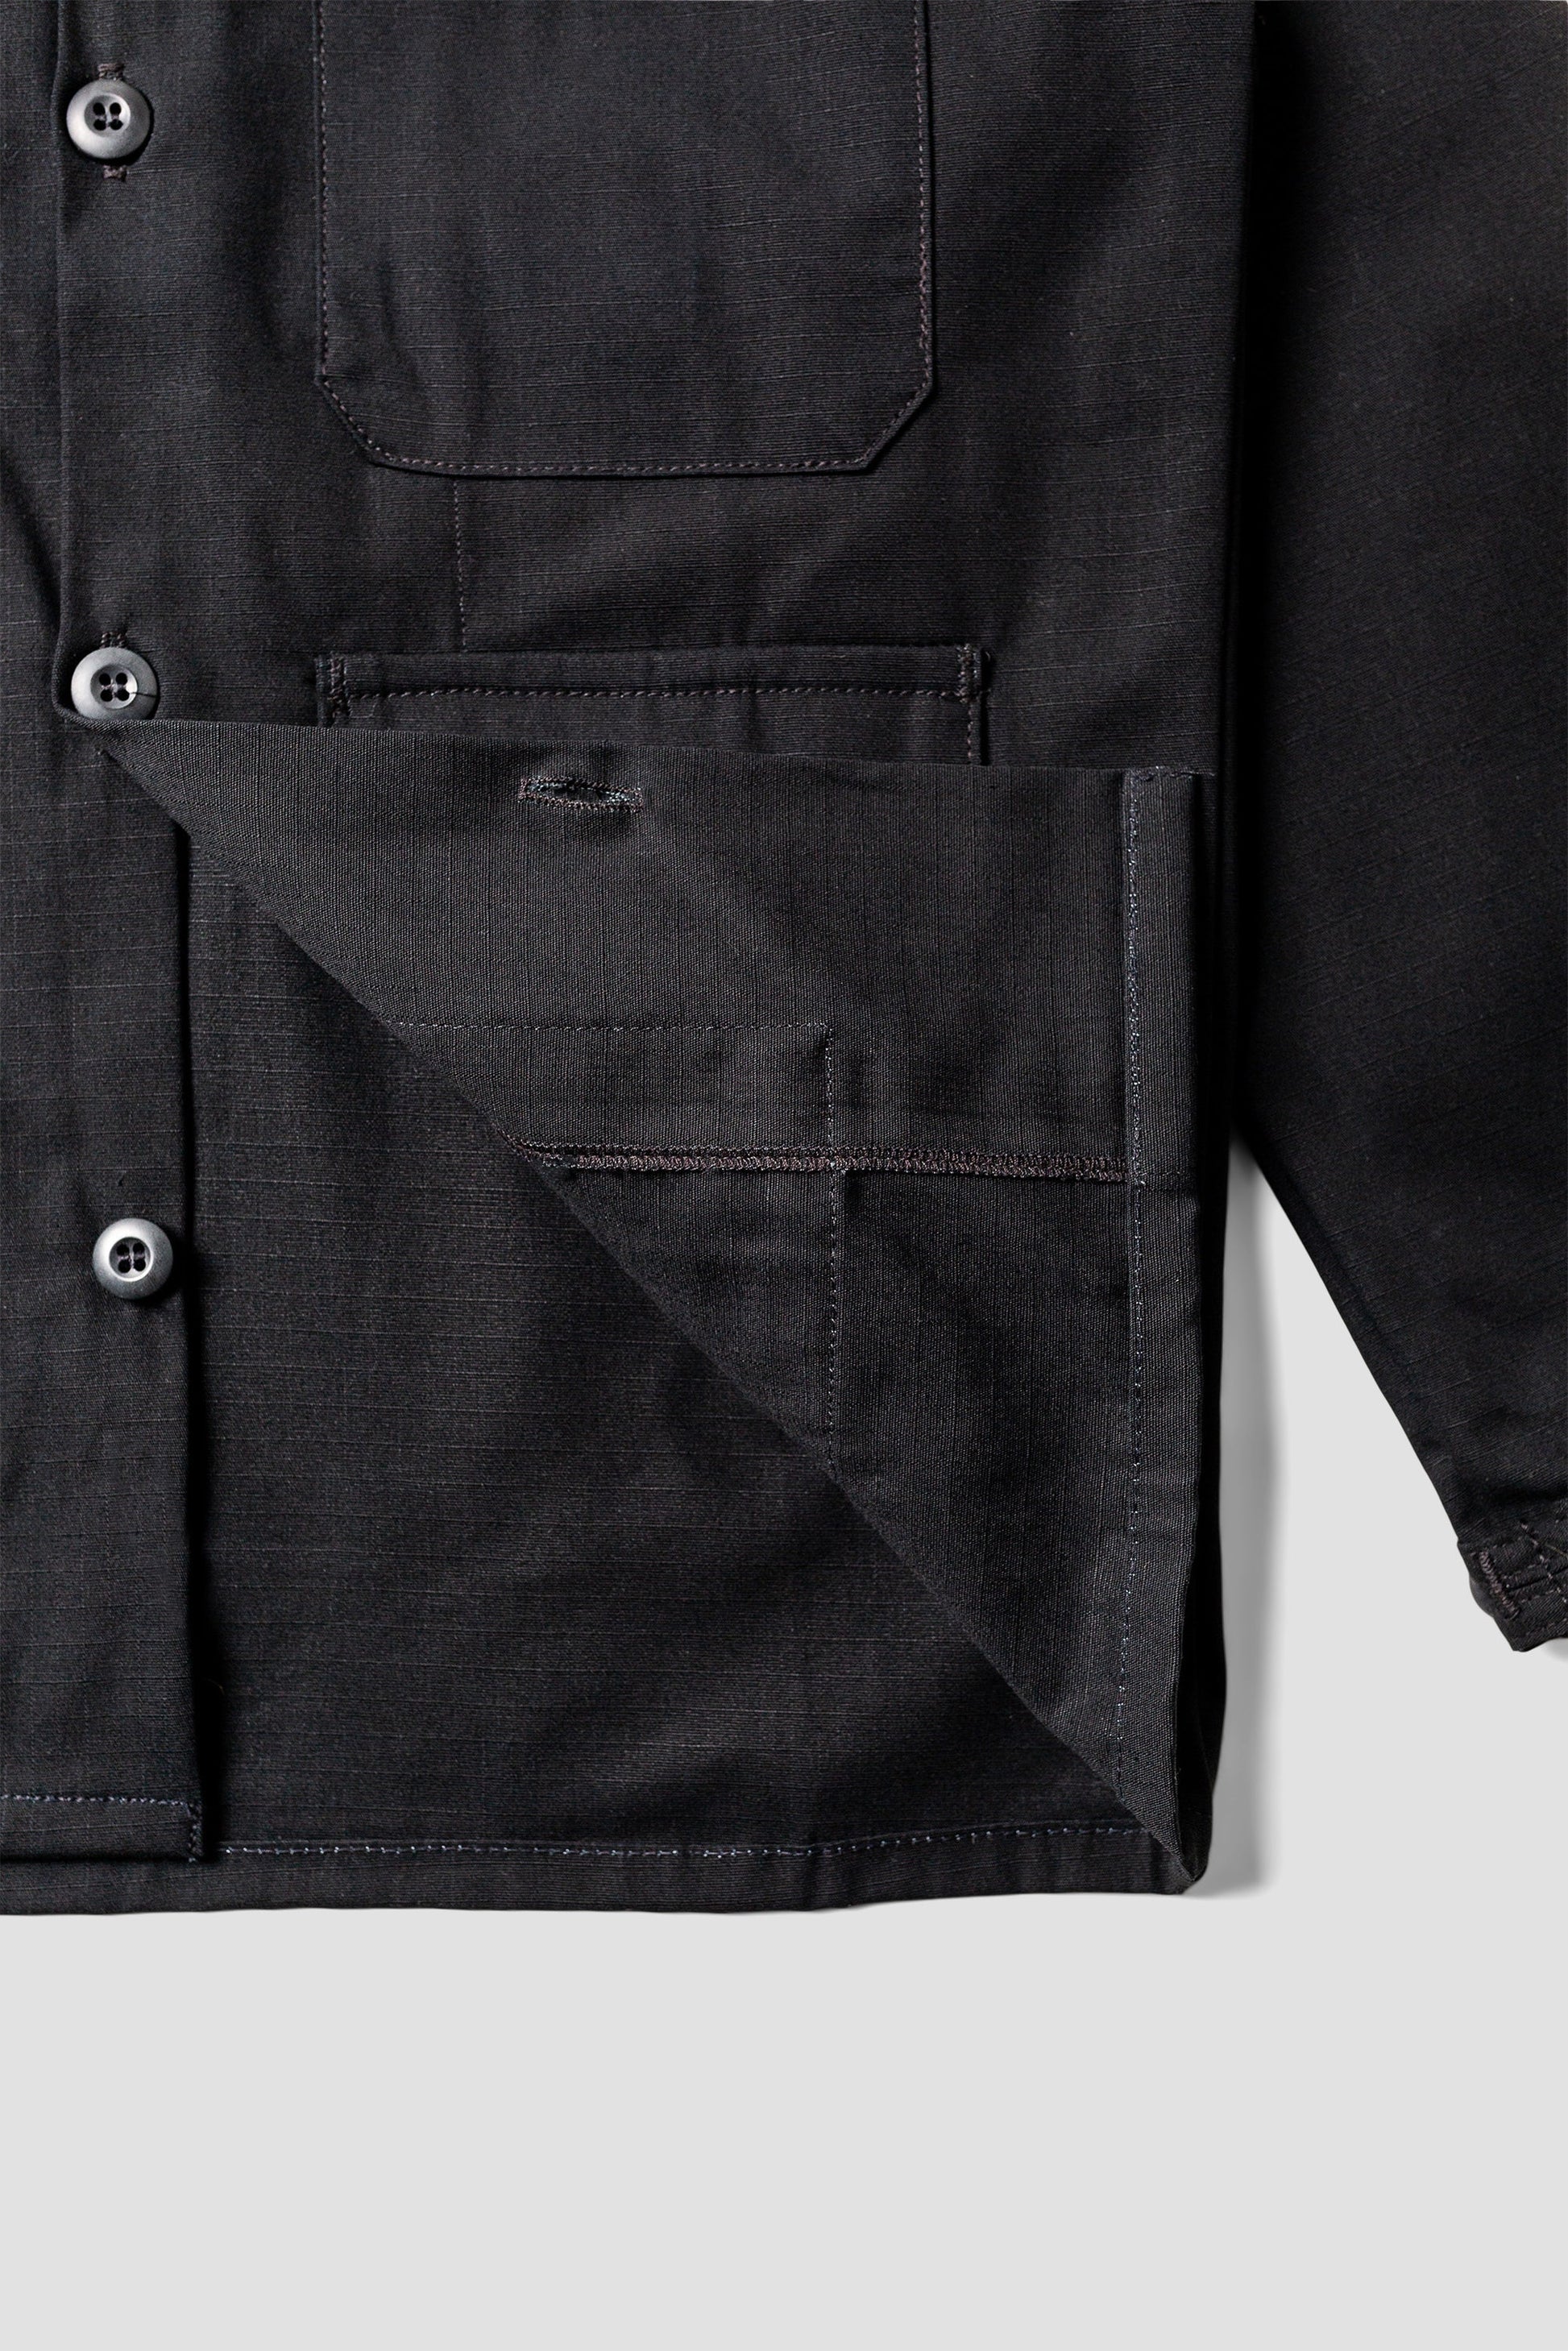 4 Pocket Jacket (Black) - Stan Ray